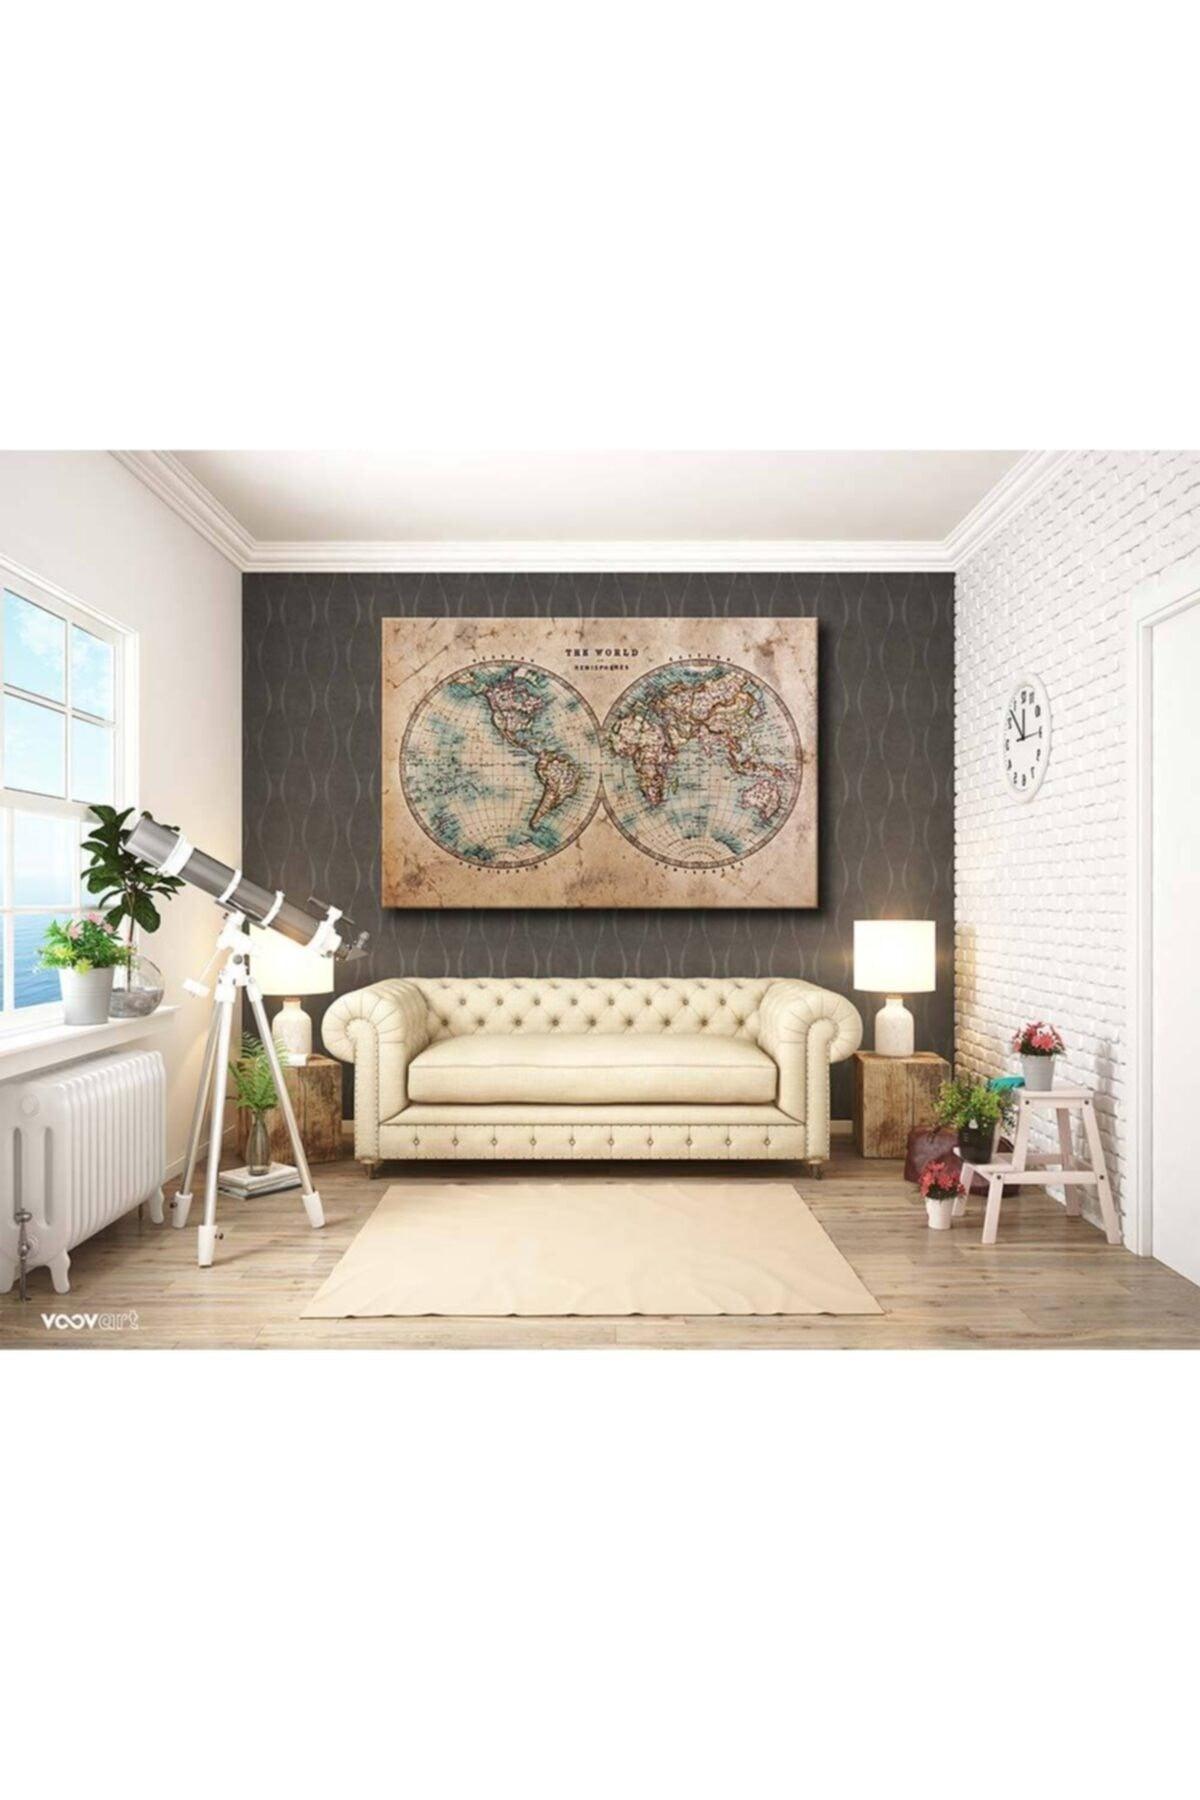 World Map Canvas Painting - Hrt102 - Swordslife